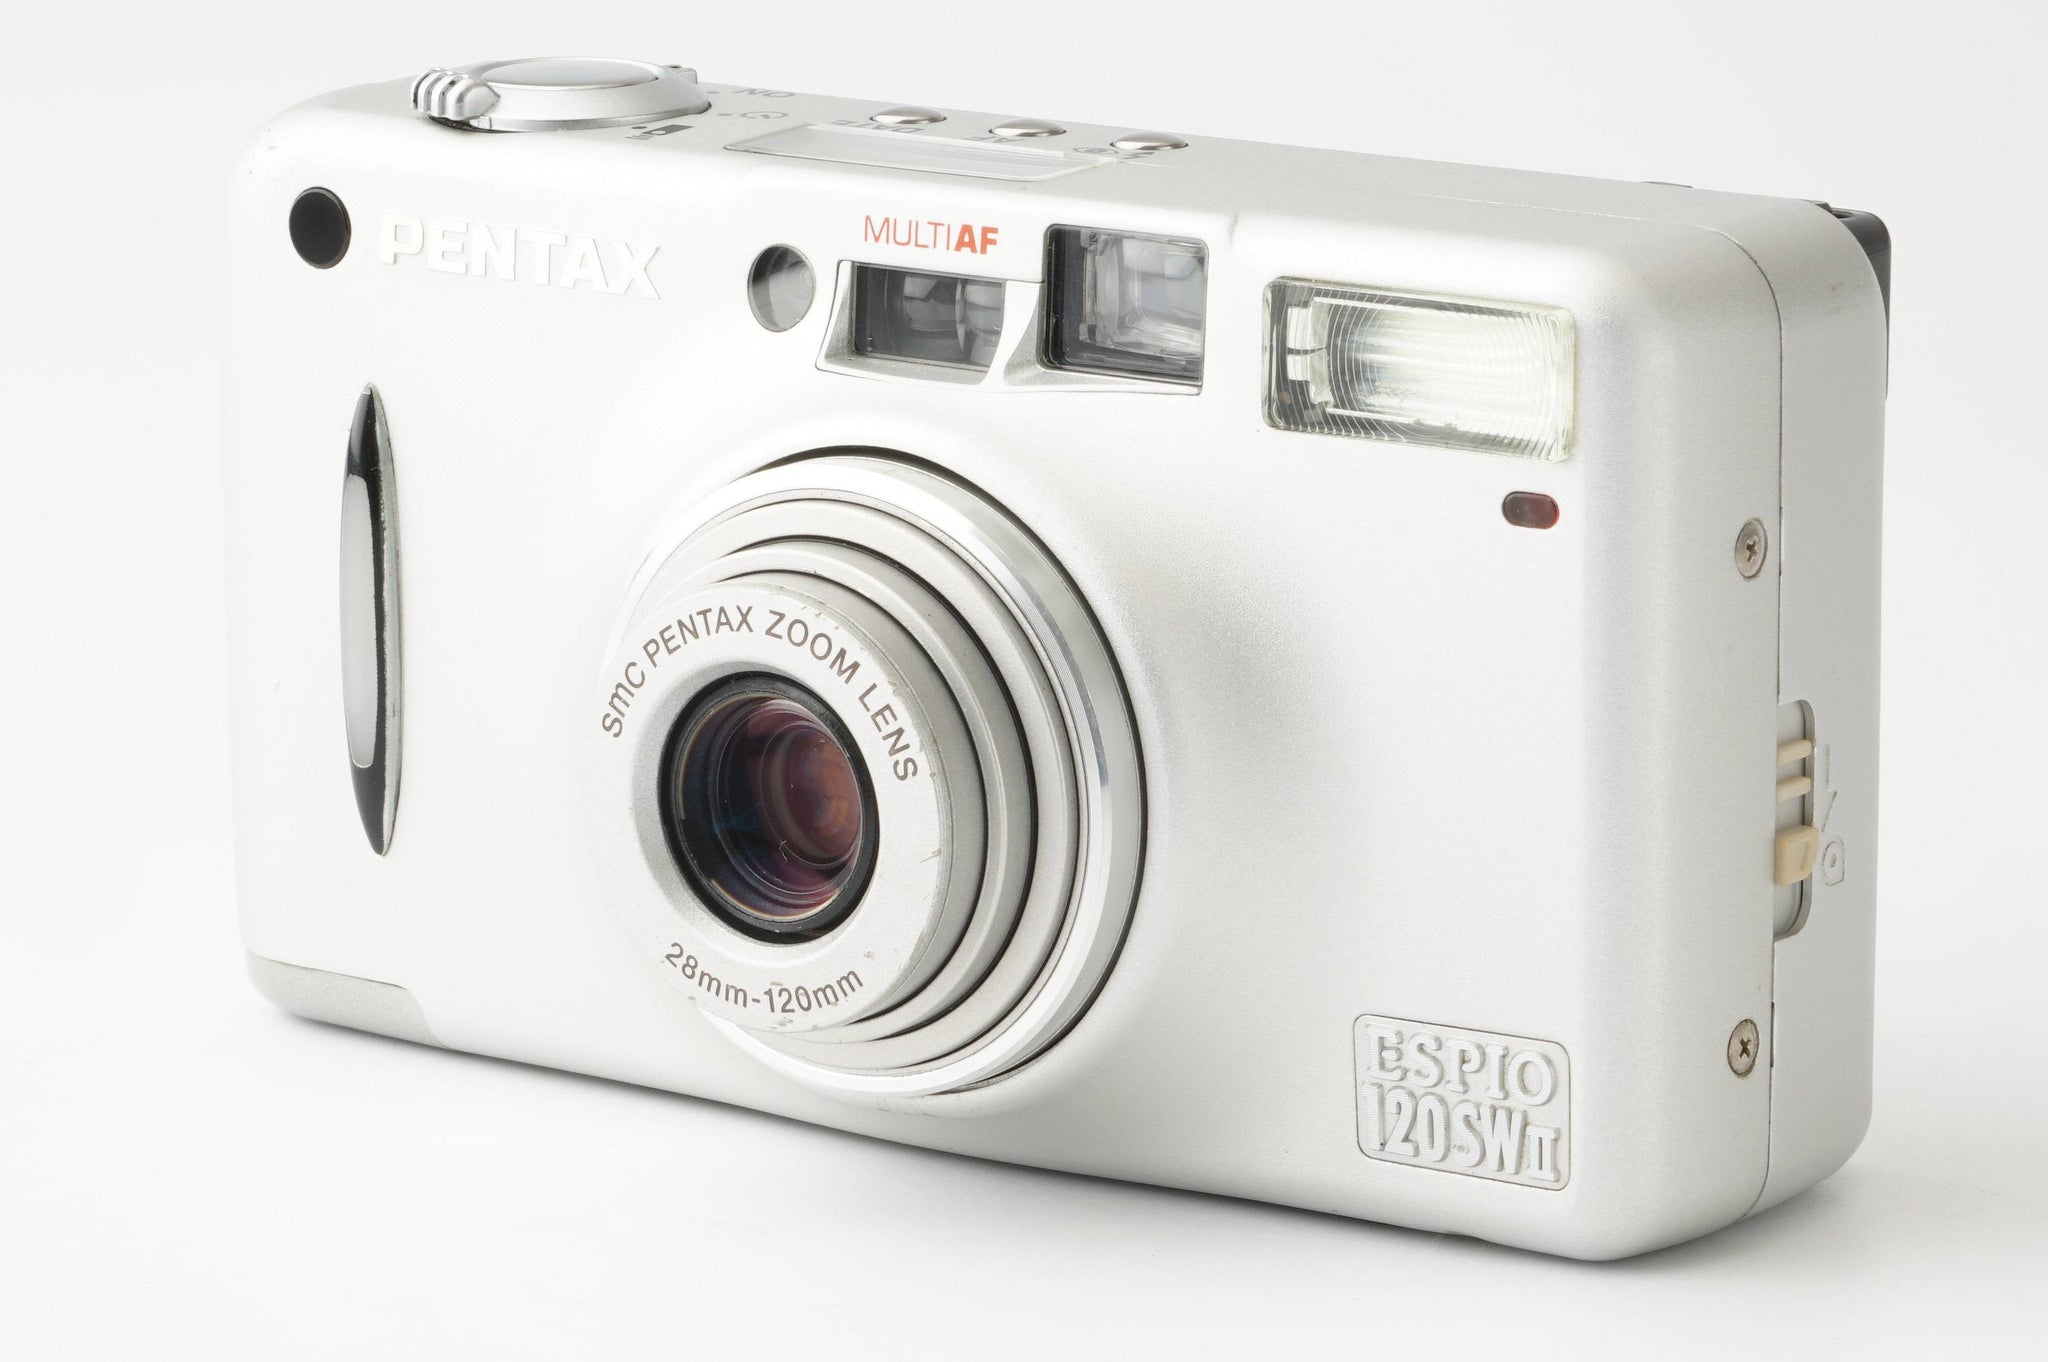 Pentax ESPIO 120 SW II / smc PENTAX ZOOM 28-120mm – Natural Camera 